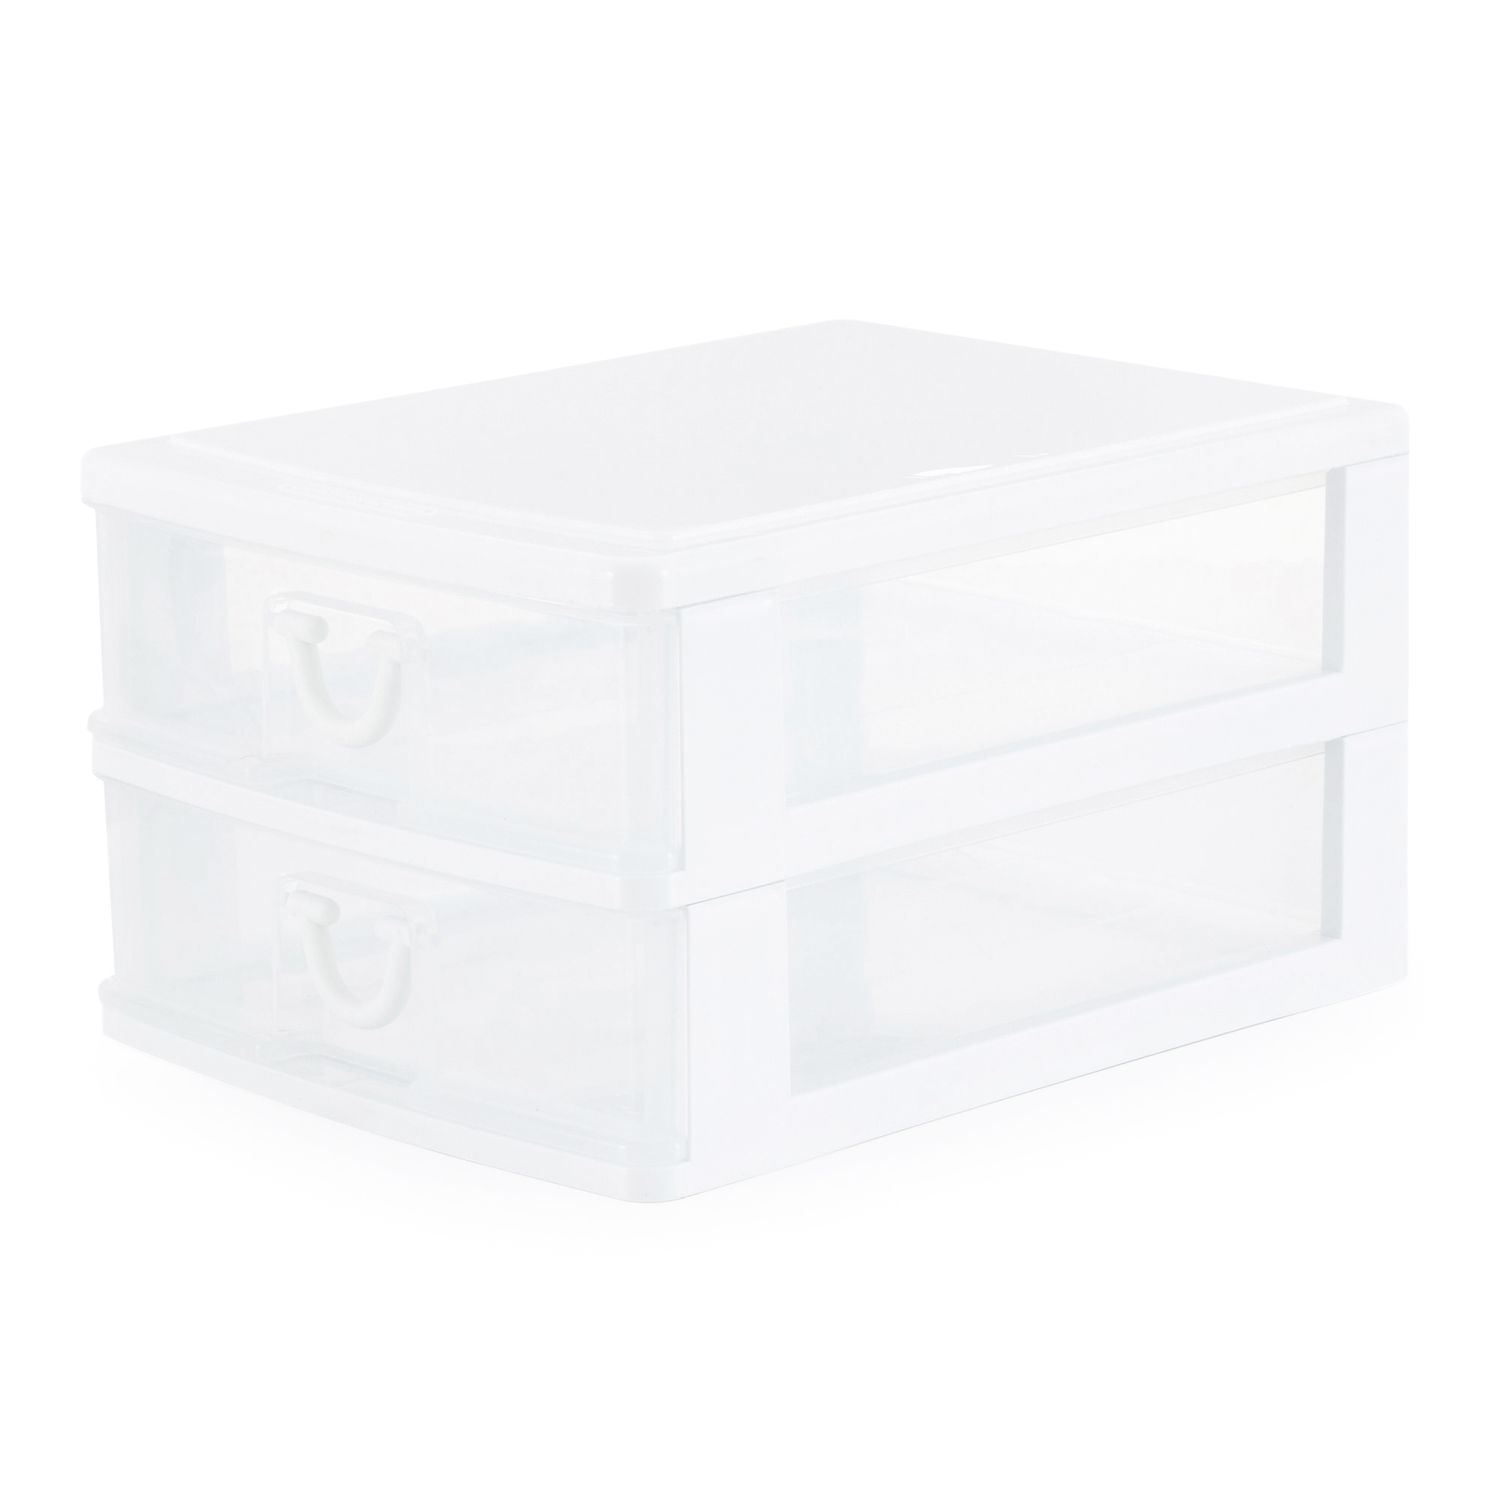 Gracious Living Mini 2 Drawer Organizer w/ Flip Top Storage, White (3 Pack)